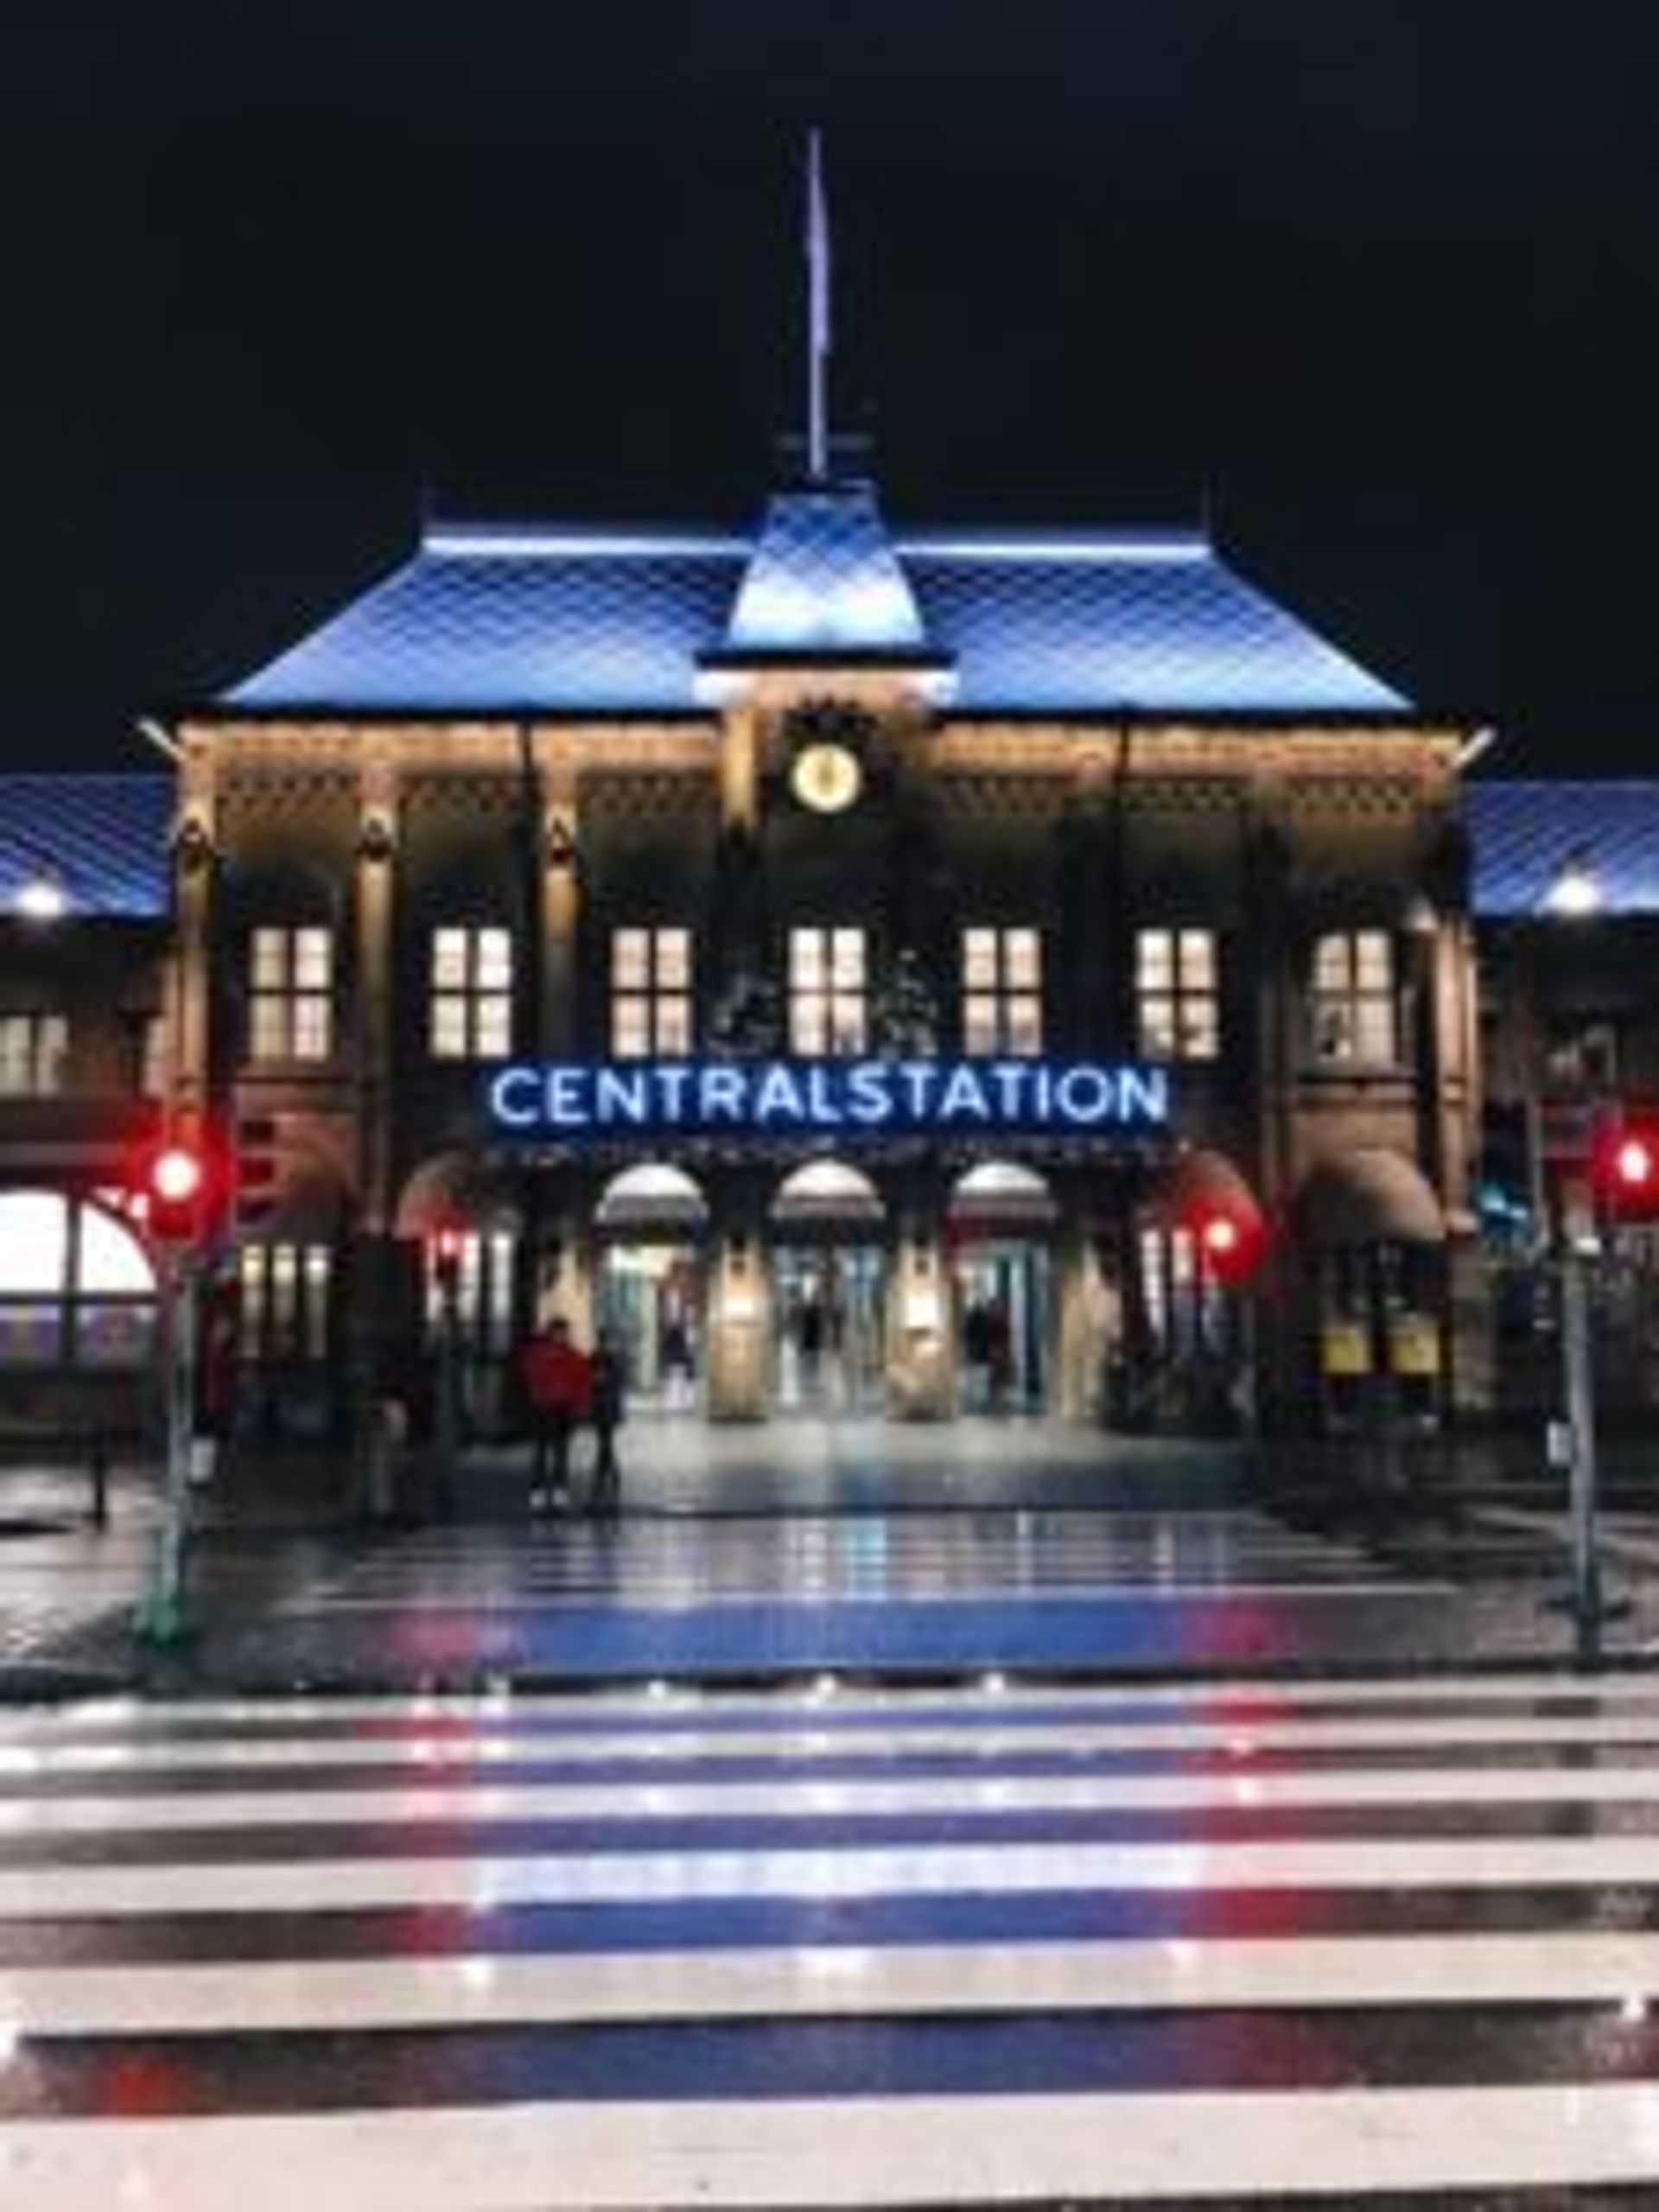 Gothenburg's central station lit up at night.